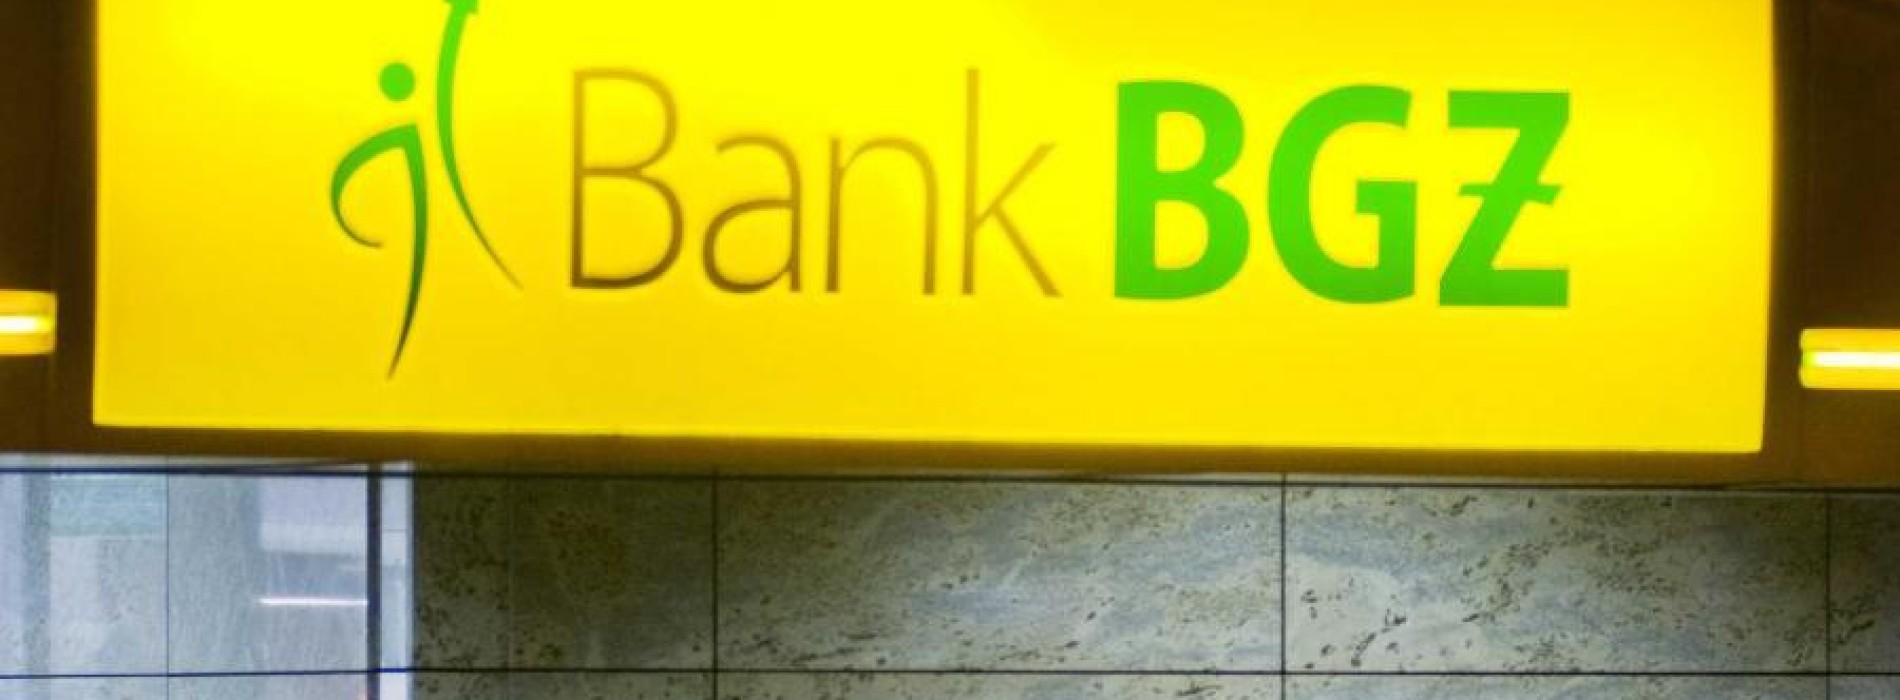 Bankowość mobilna w Banku BGŻ